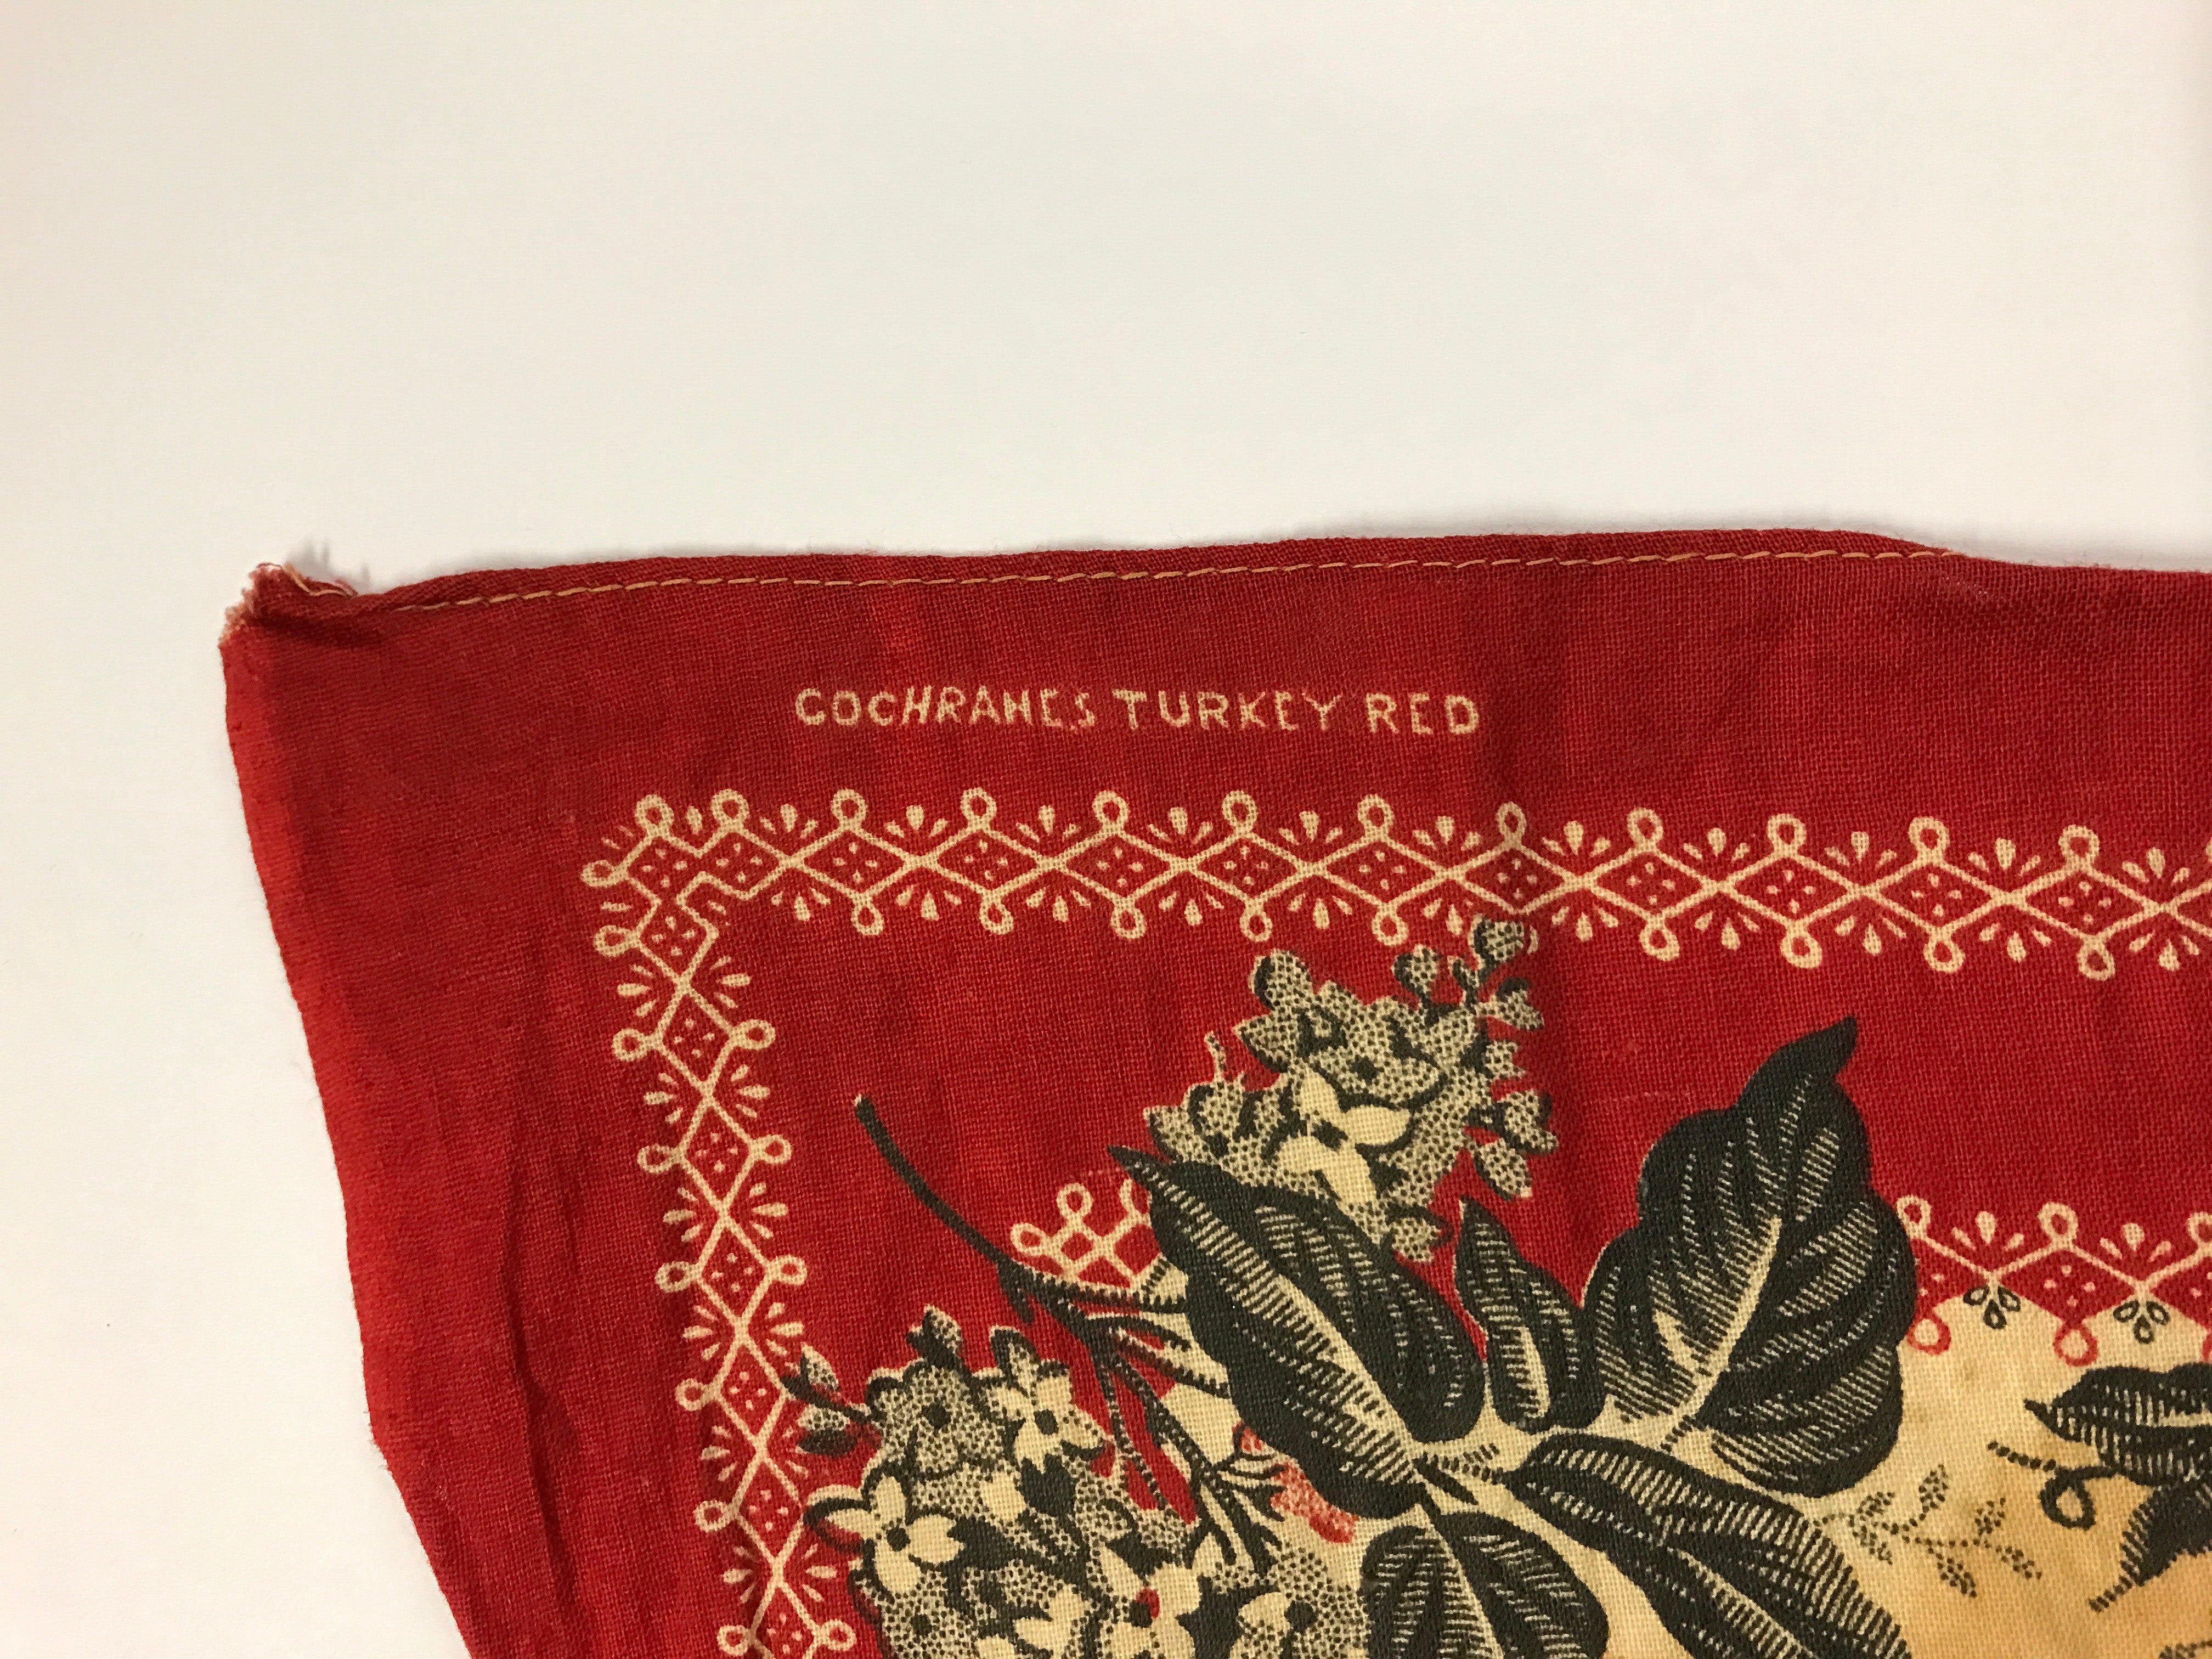 Antique Cochranes Turkey Red Cotton Bandana Grover Cleveland Campaign